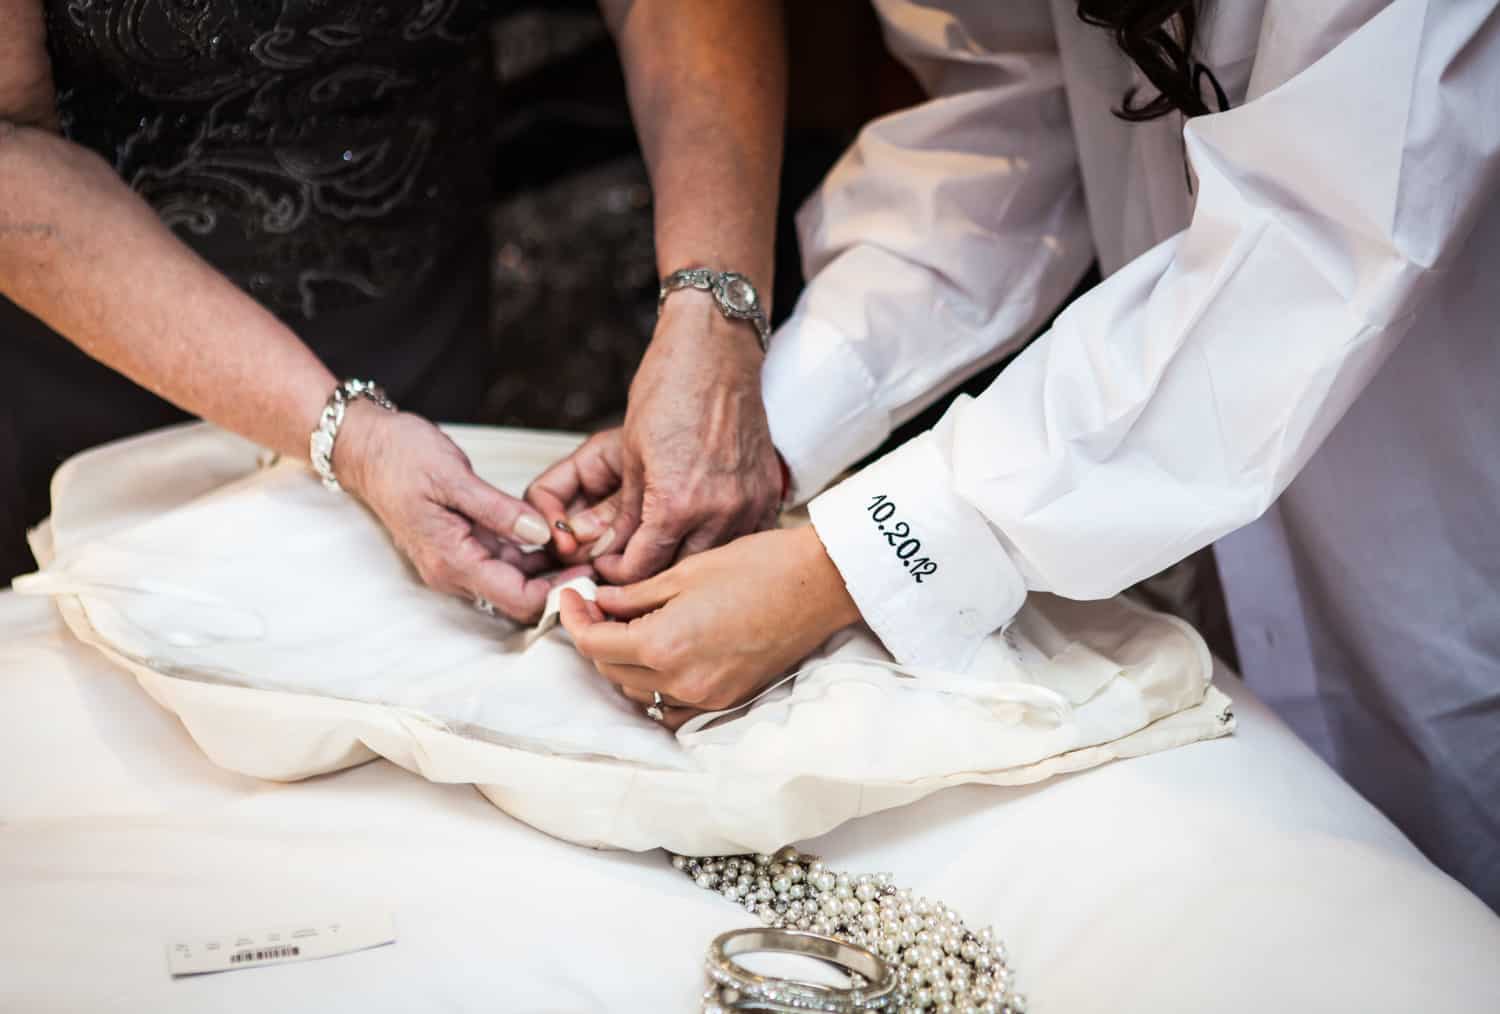 Hands fixing wedding dress